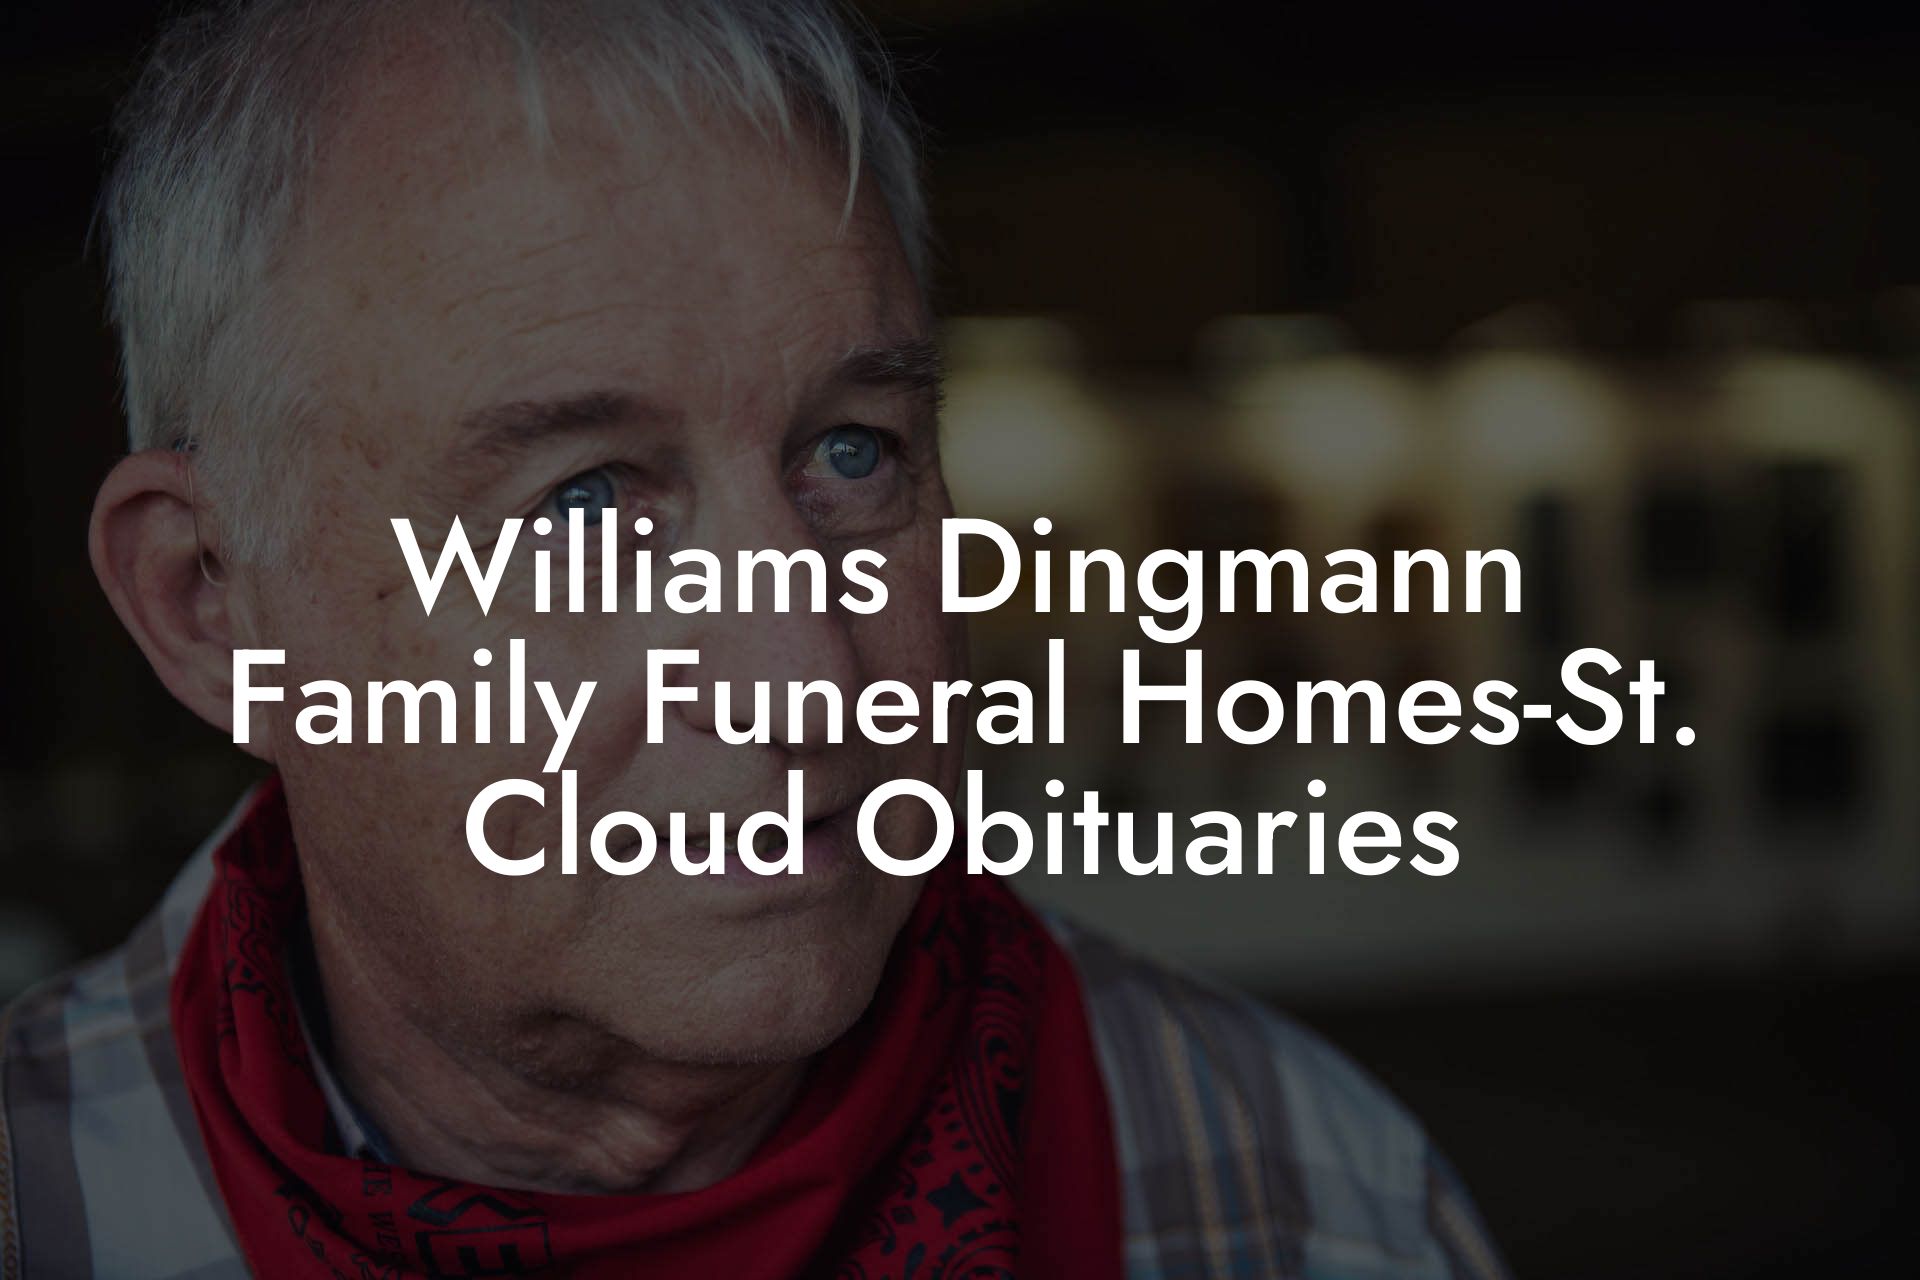 Williams Dingmann Family Funeral Homes-St. Cloud Obituaries